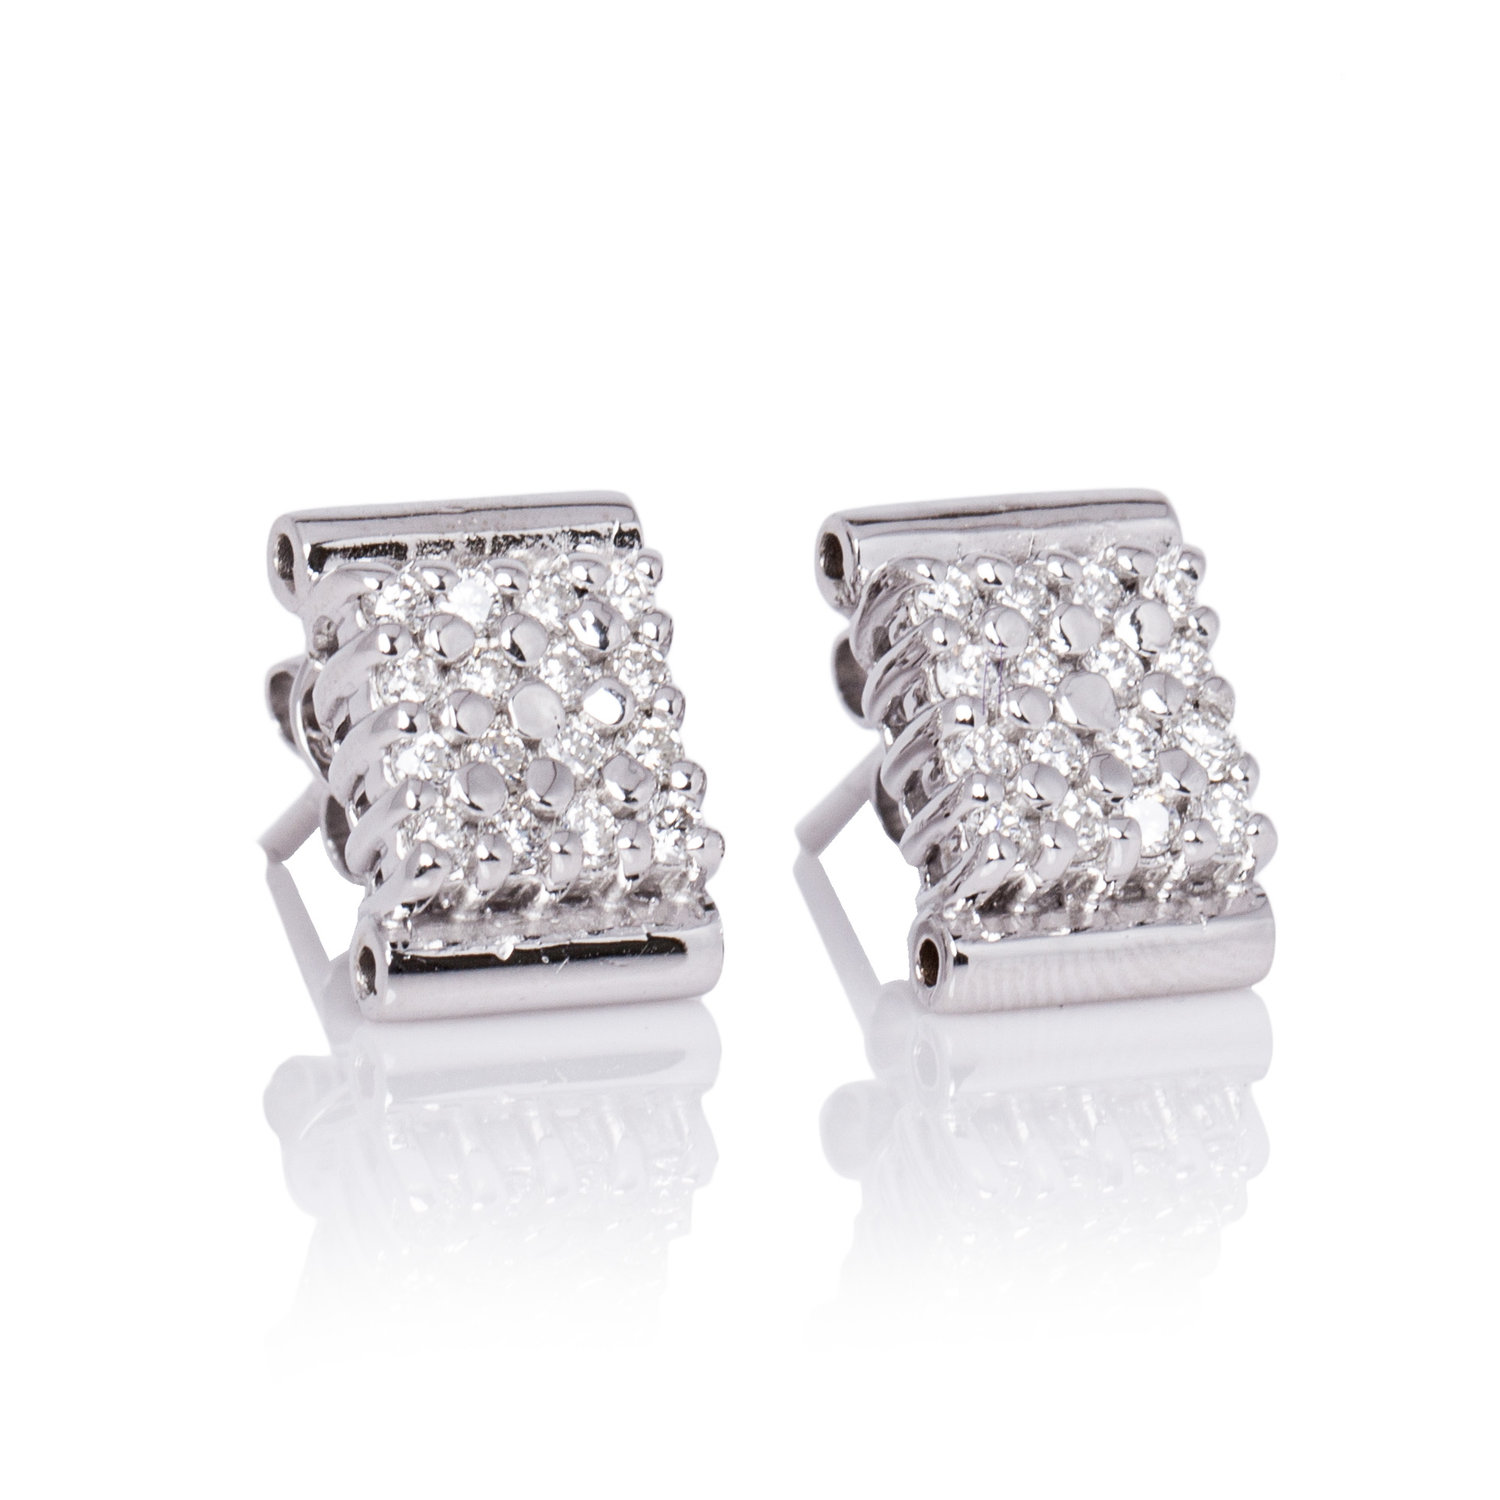 51-continental-jewels-manufacturers-earrings-cje000051-18k-white-gold-vvs1-diamonds-customised-square-earrings.jpg